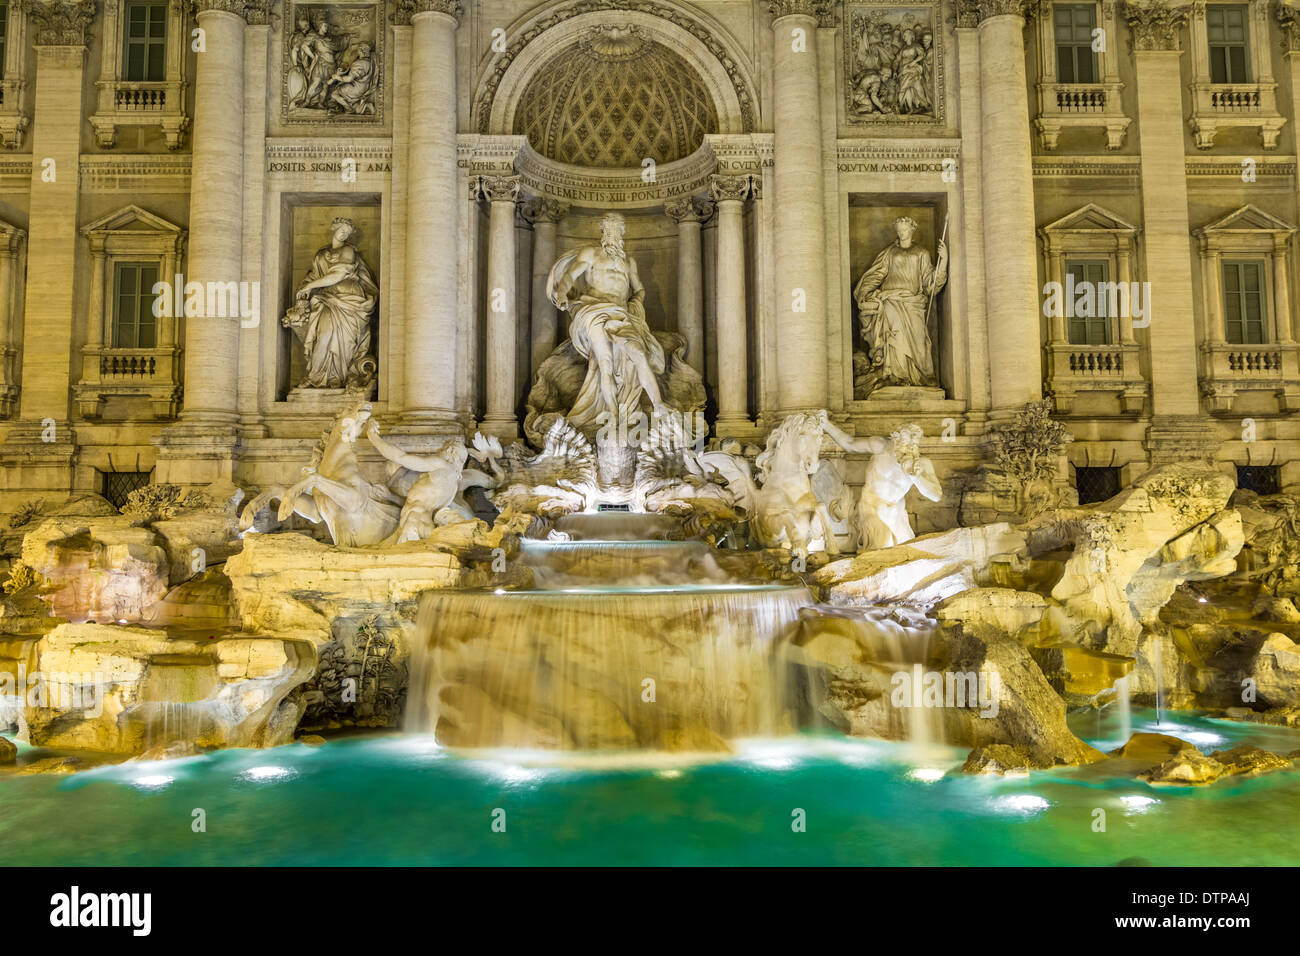 Neptune statue of the Trevi Fountain in Rome Italy Stock Photo